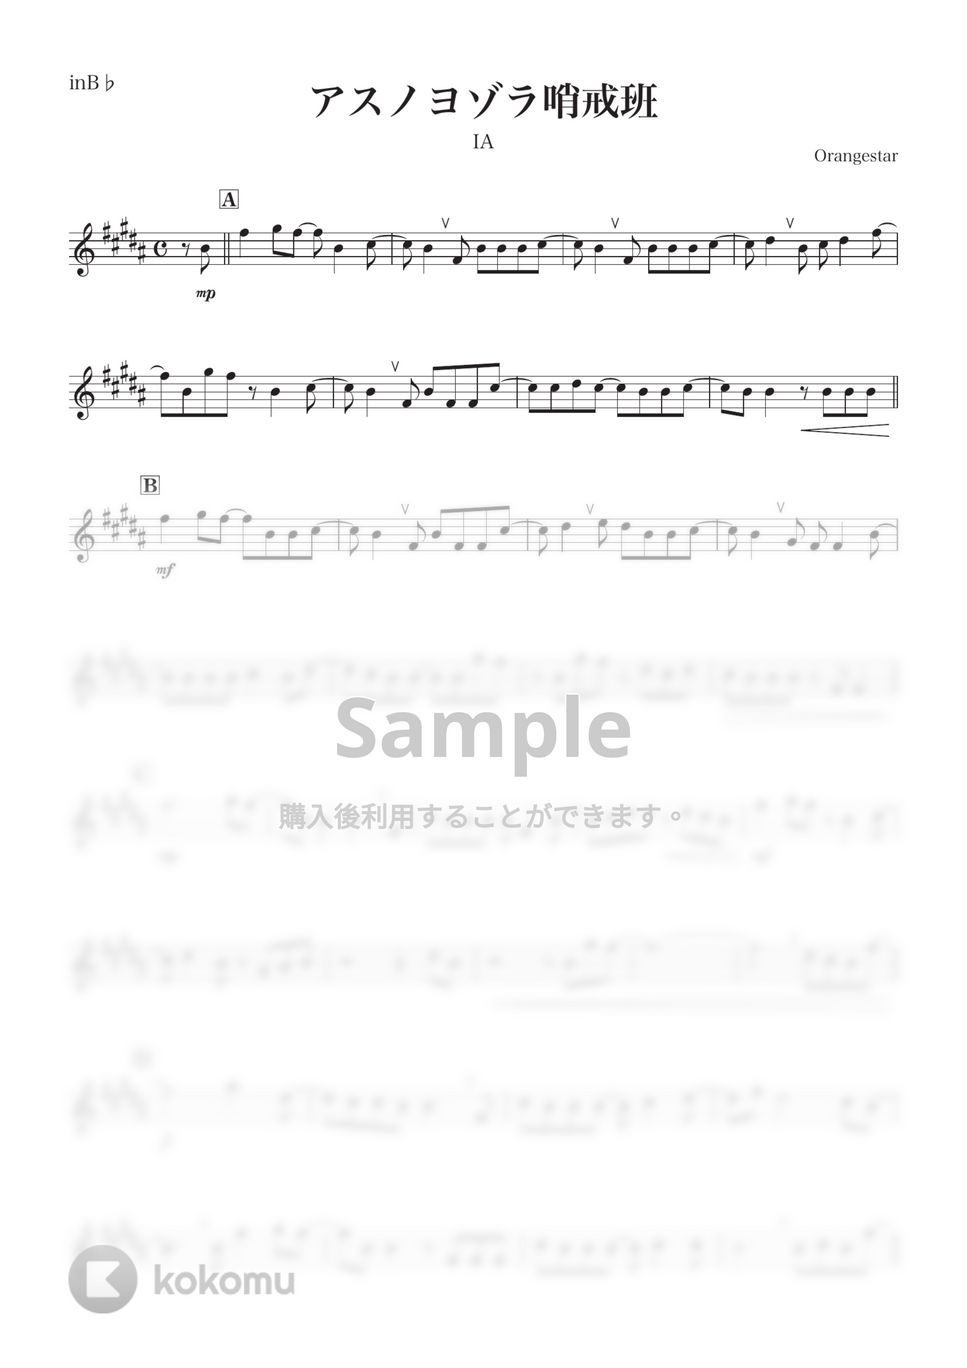 Orangestar - アスノヨゾラ哨戒班 (B♭) by kanamusic